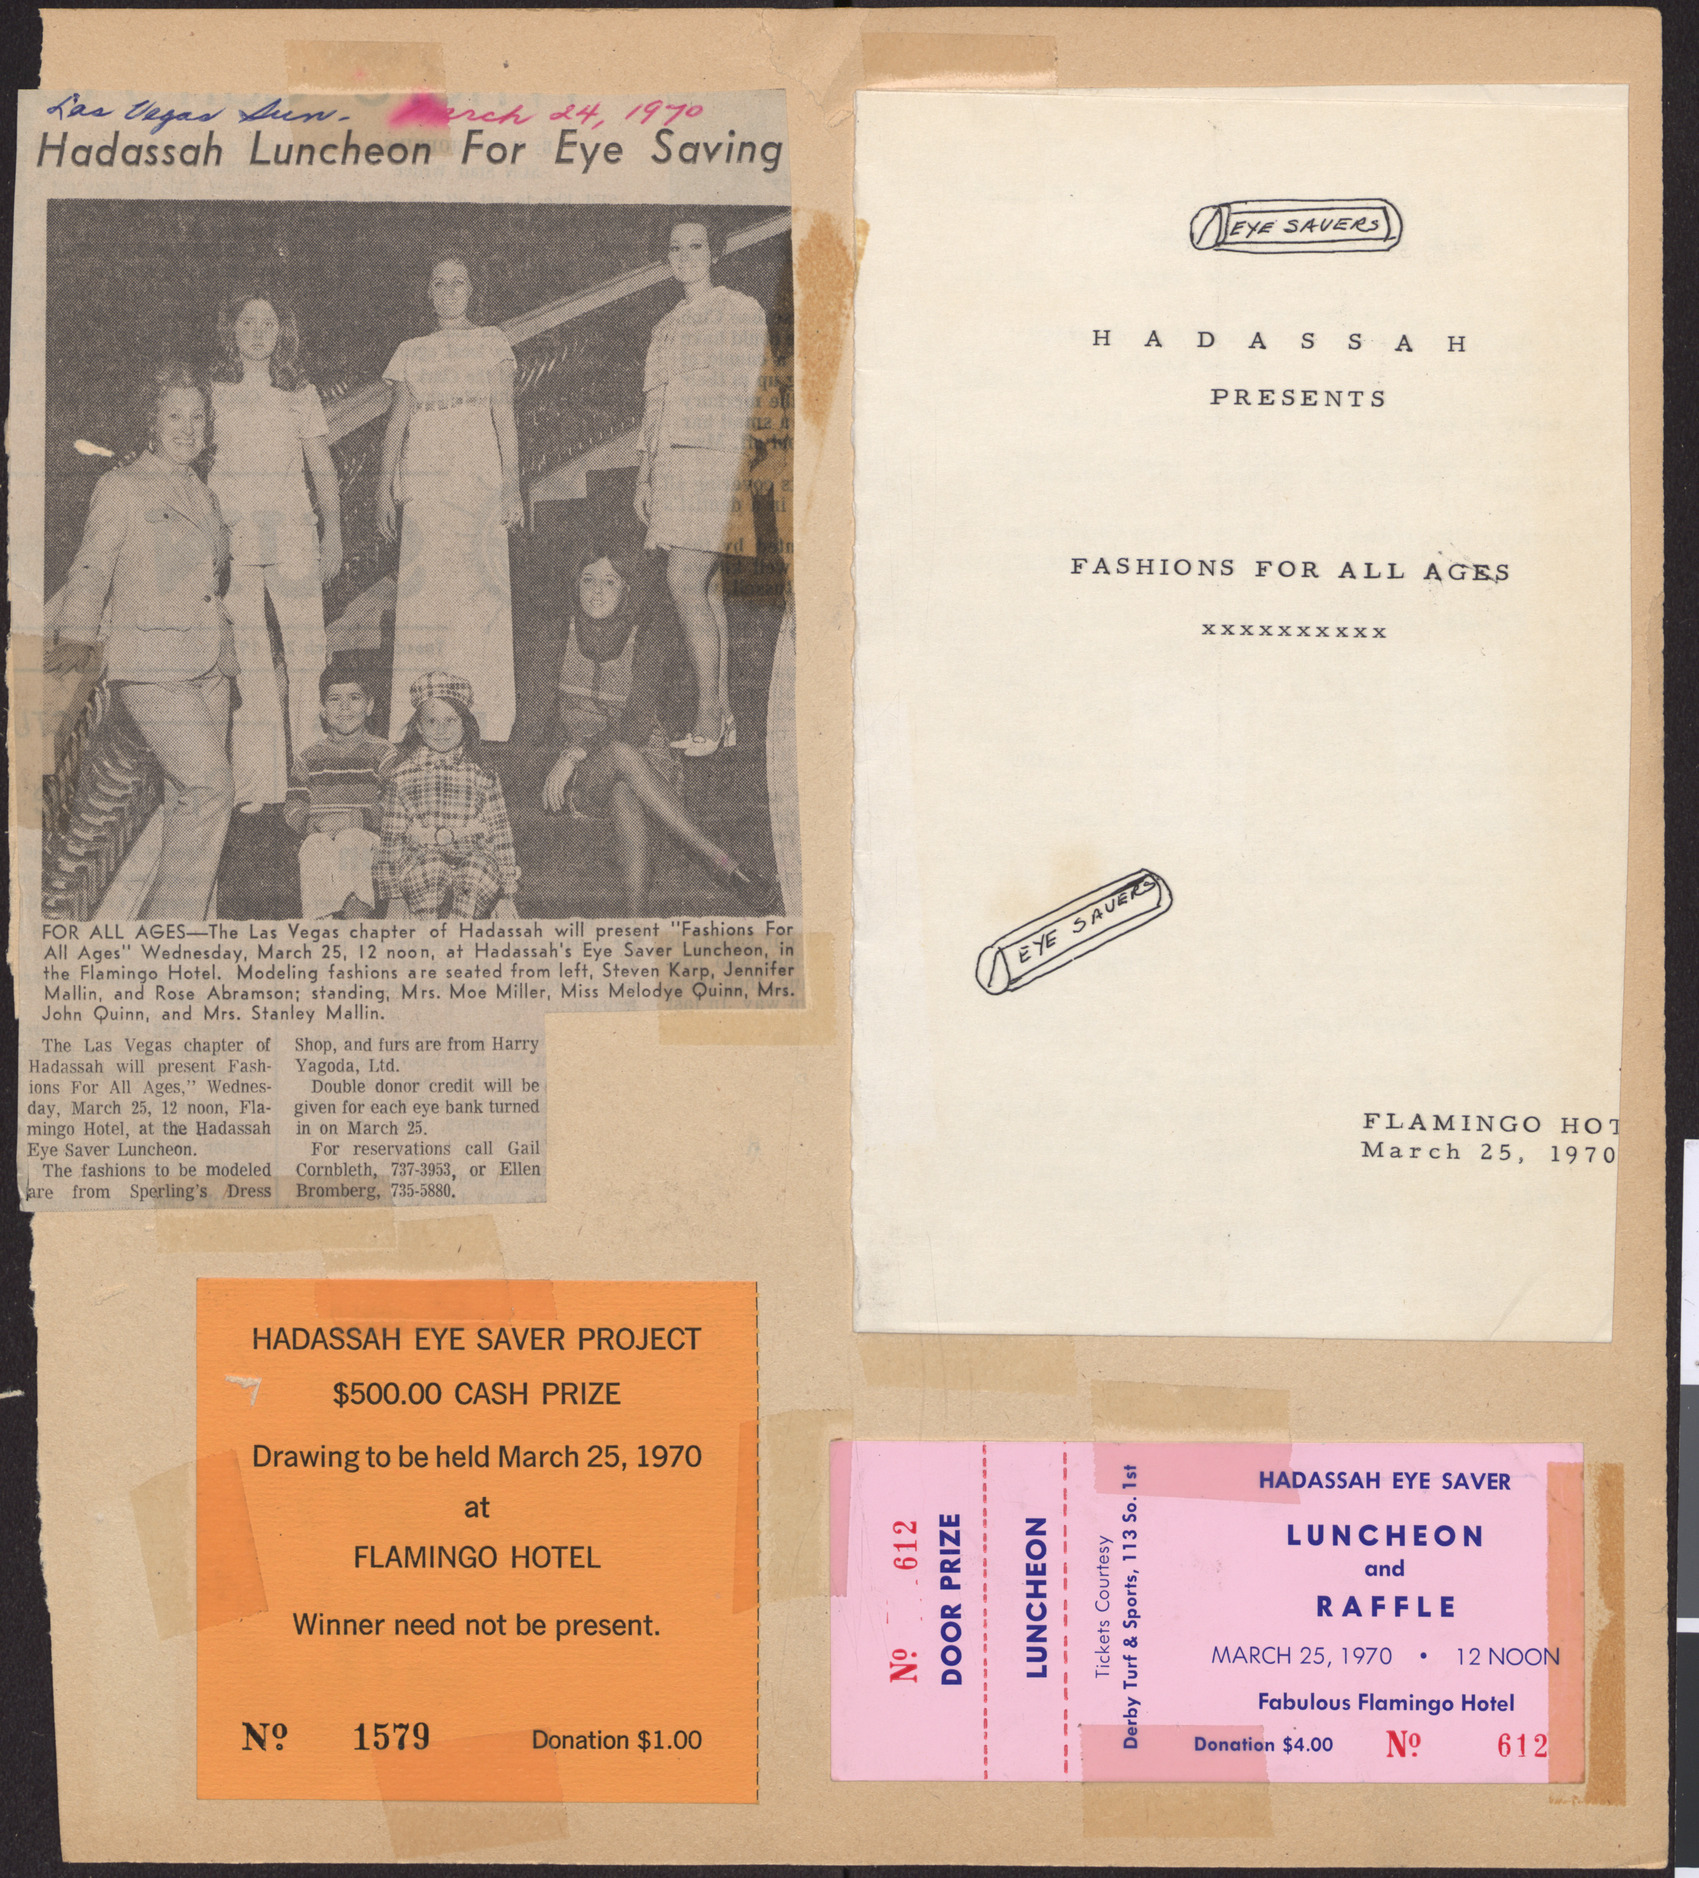 Newspaper clipping and ephemera about Hadassah Eye-Saver event, March 1970